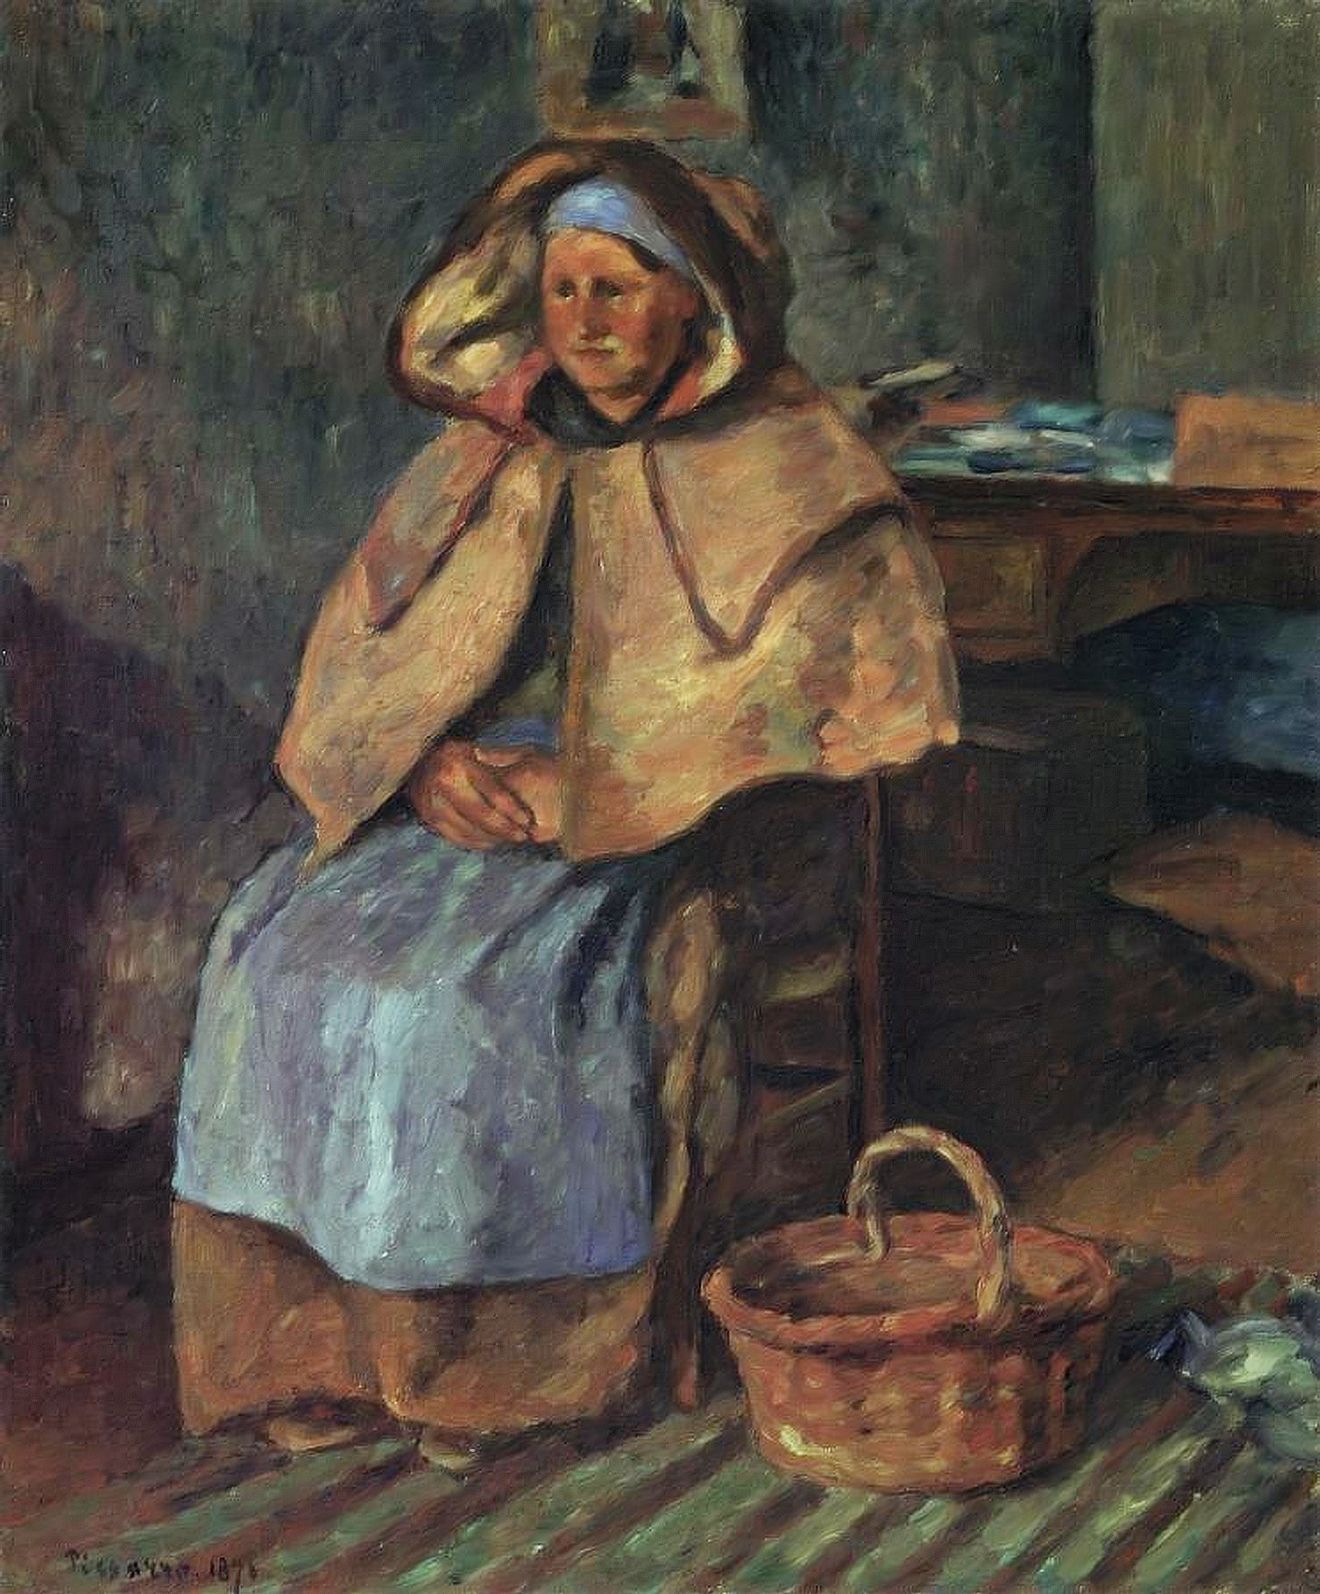 Camille+Pissarro-1830-1903 (230).jpg